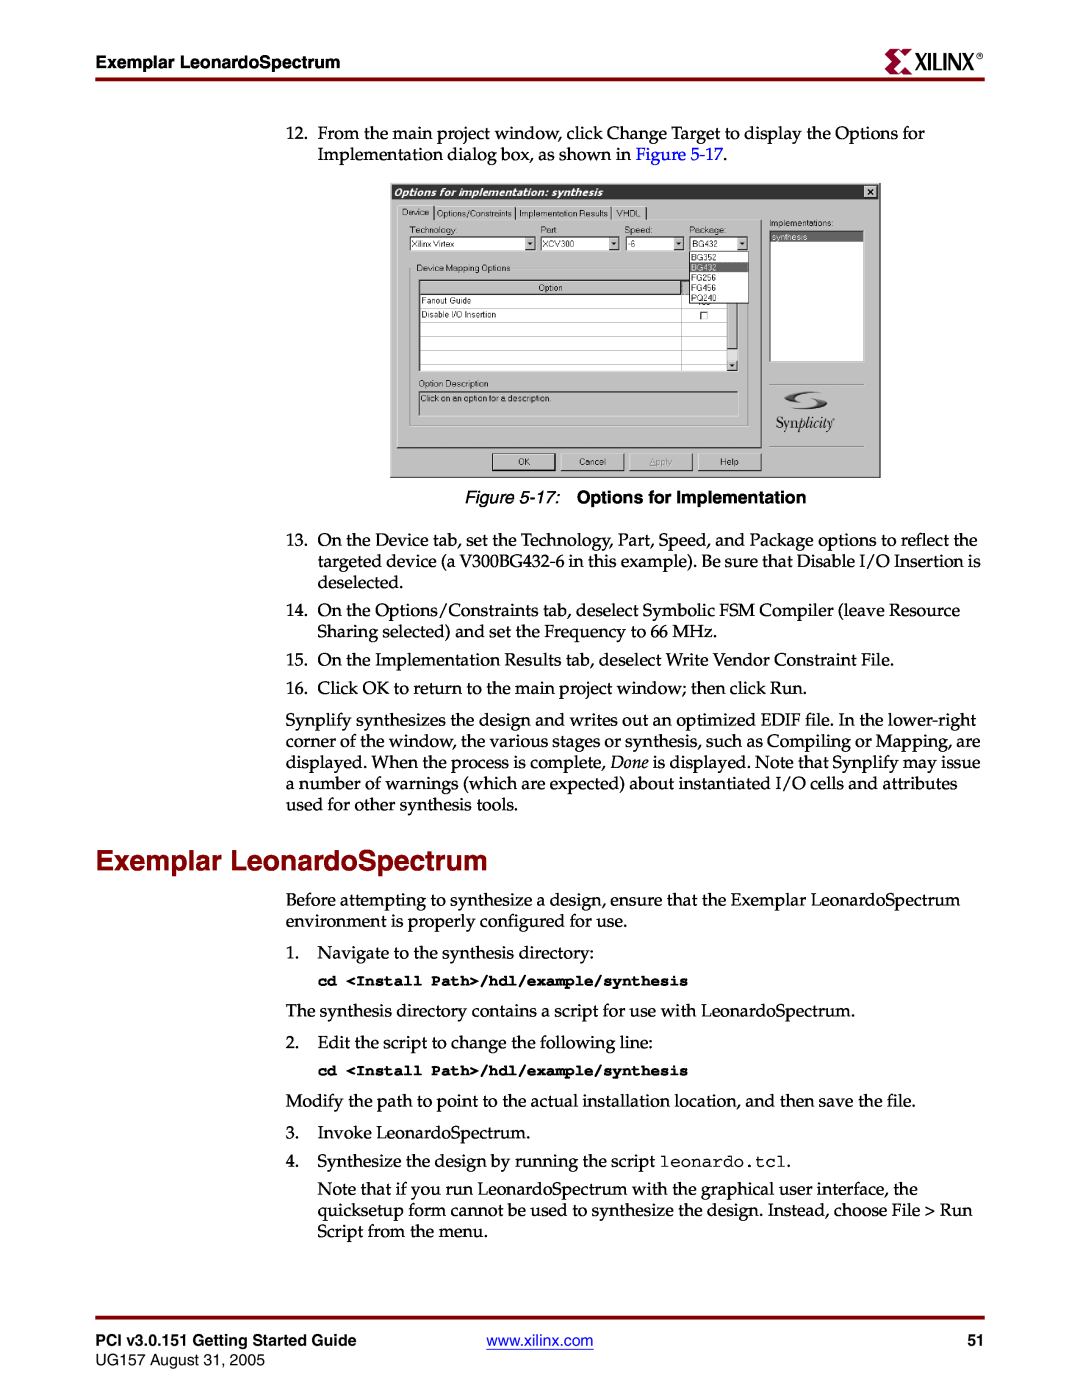 Xilinx PCI v3.0 manual Exemplar LeonardoSpectrum, 17 Options for Implementation 